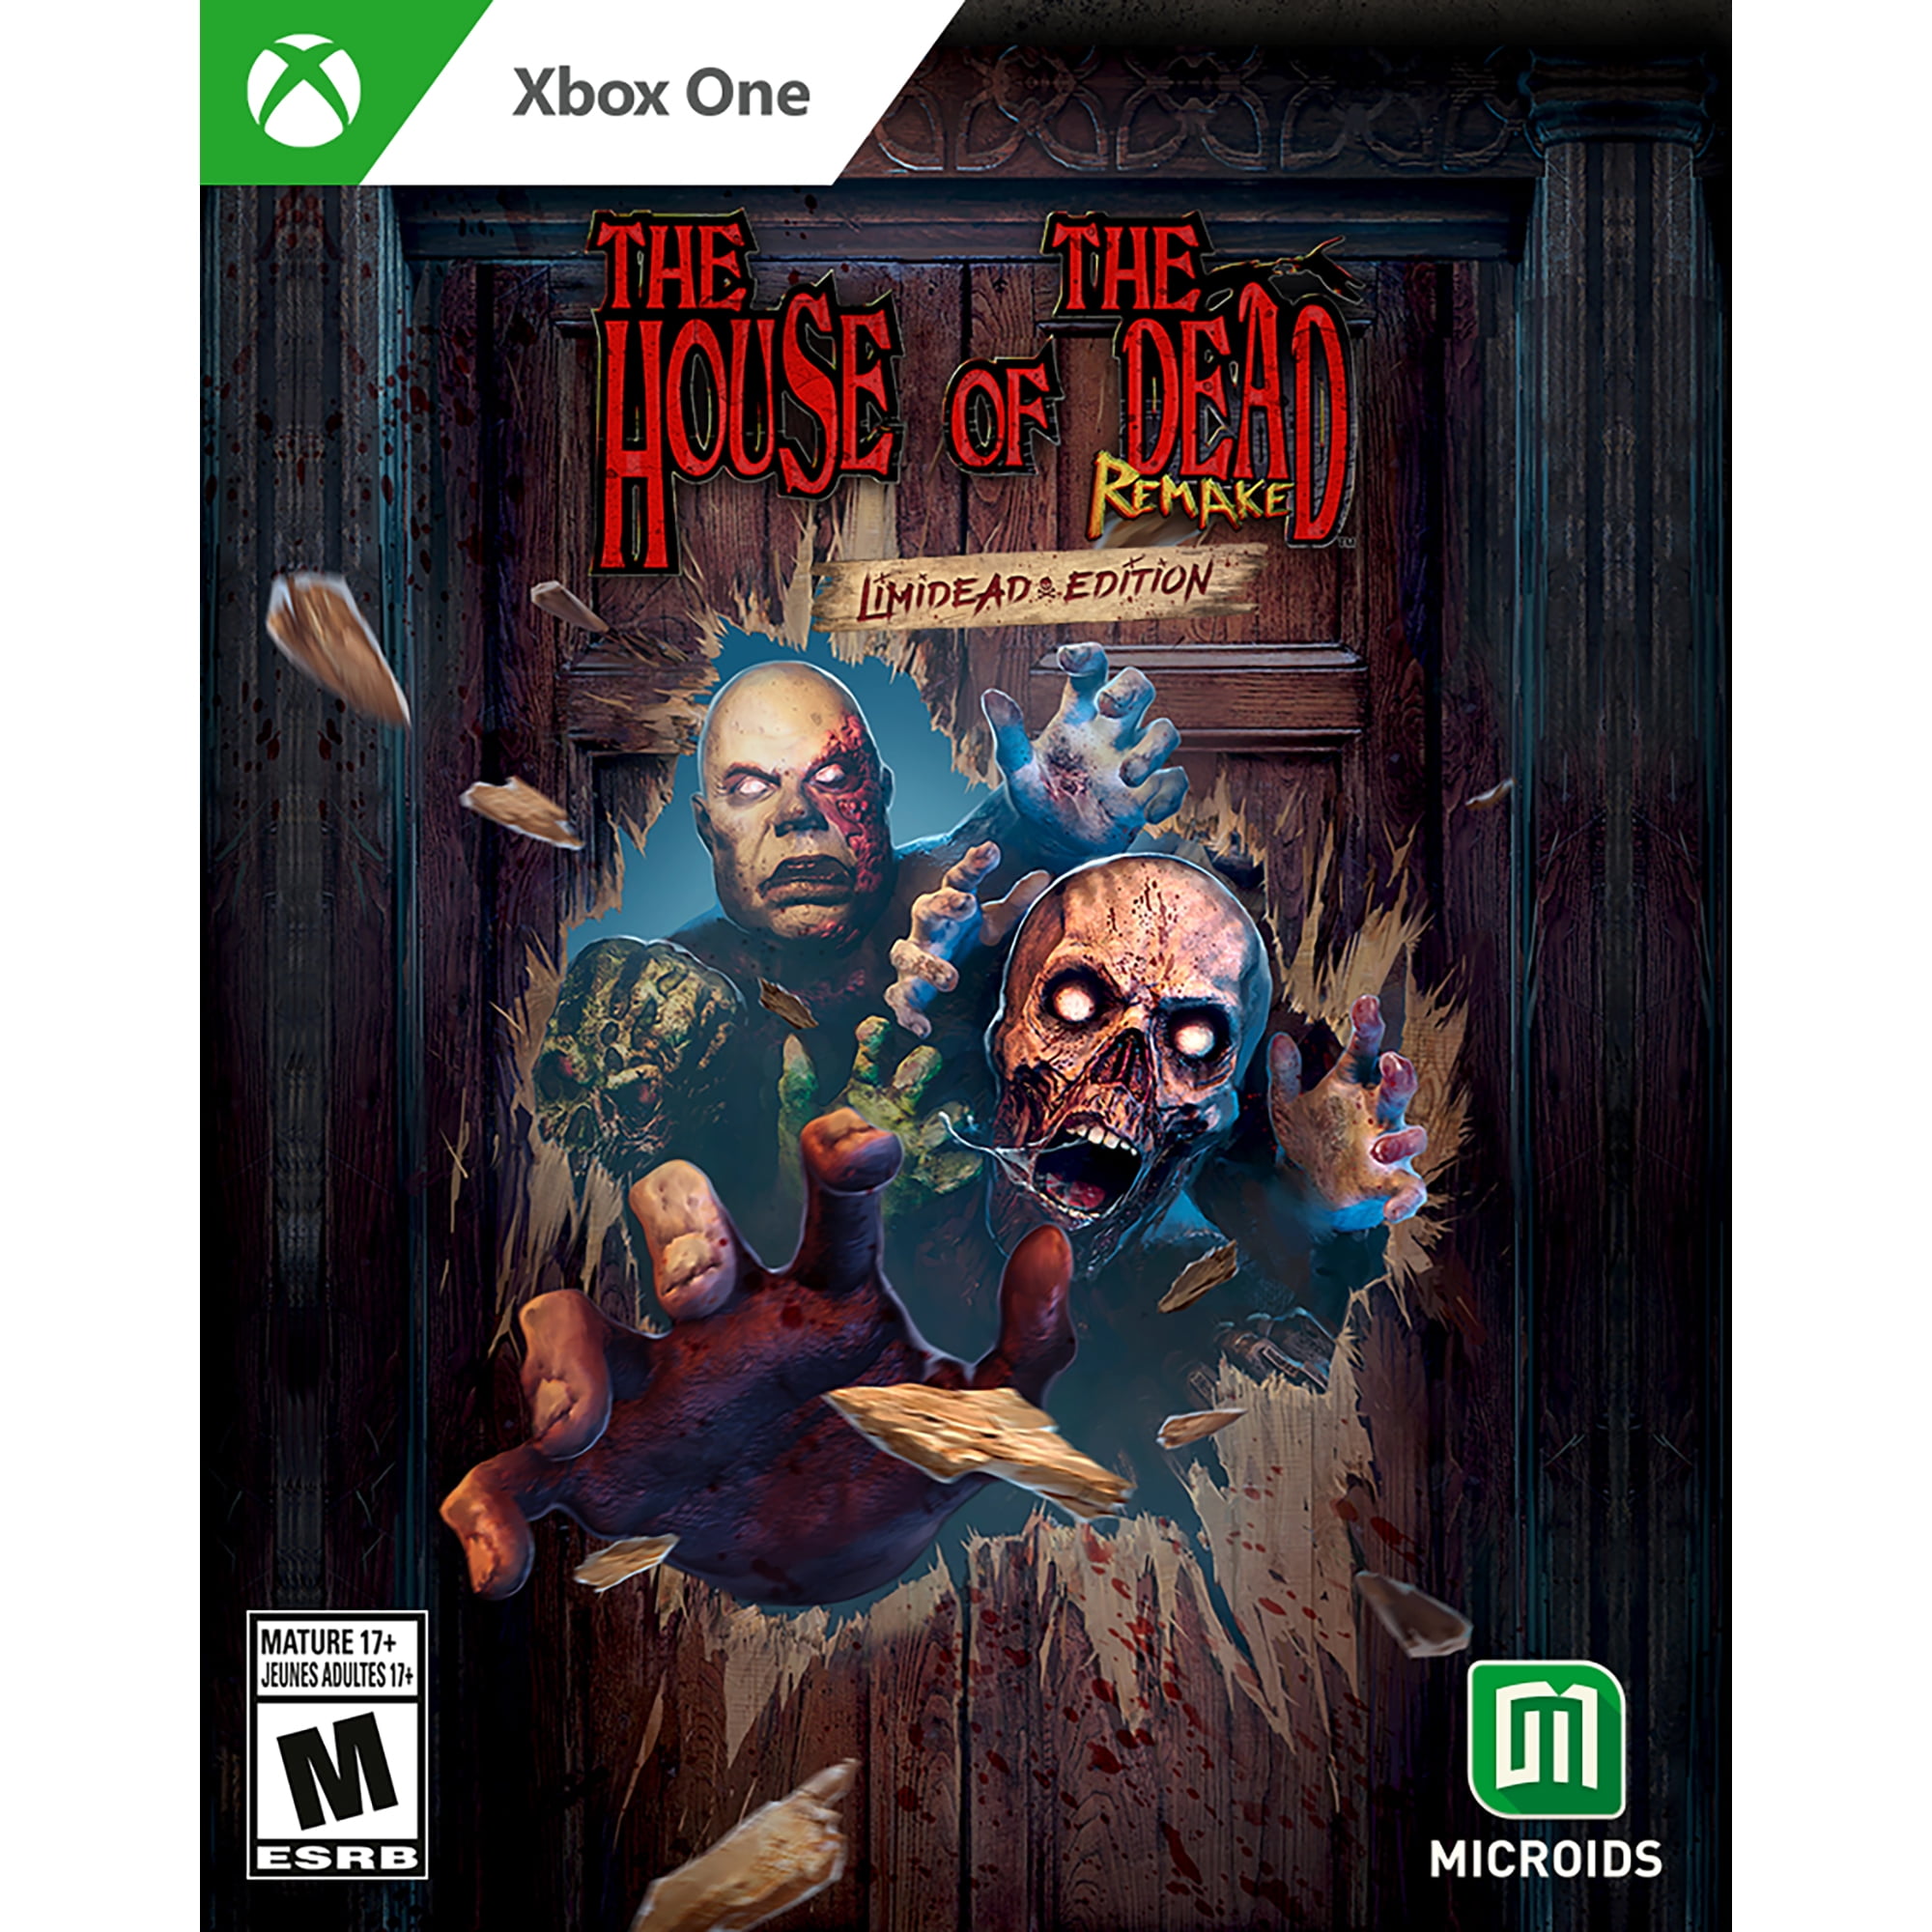 The Walking Dead: Season One - Videojuego (PS4 y Xbox One) - Vandal